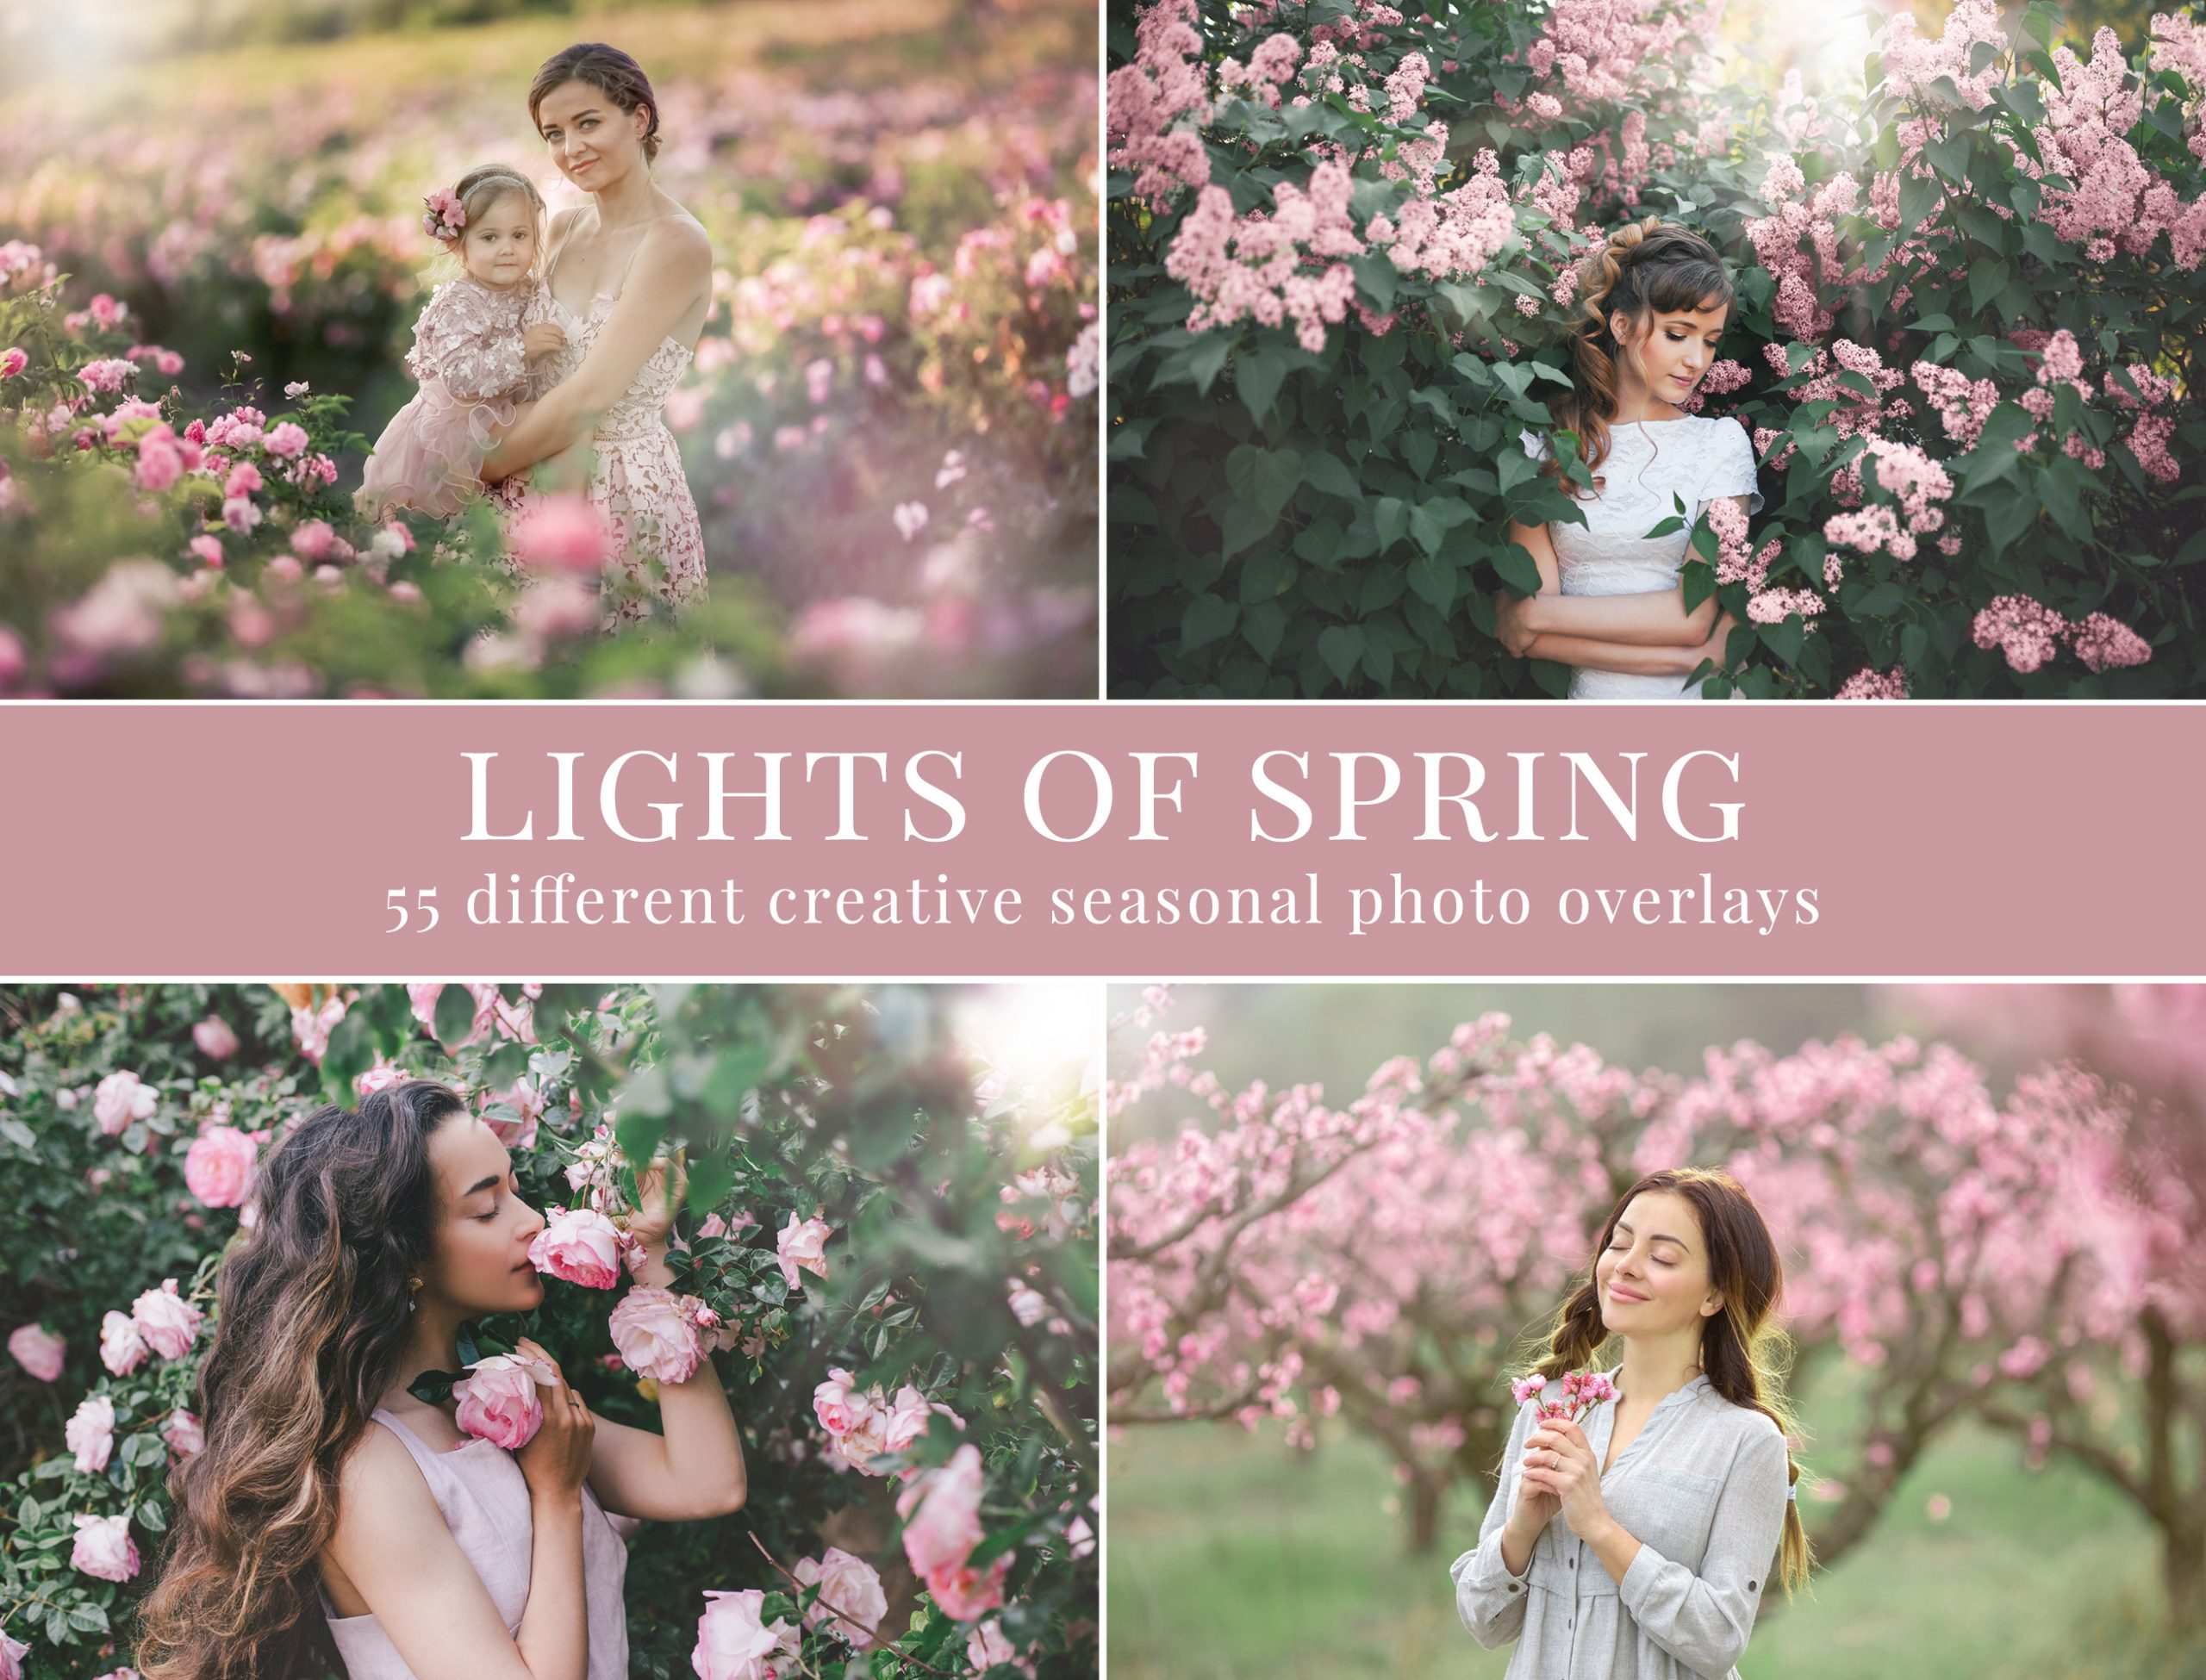 Lights of Spring photo overlays